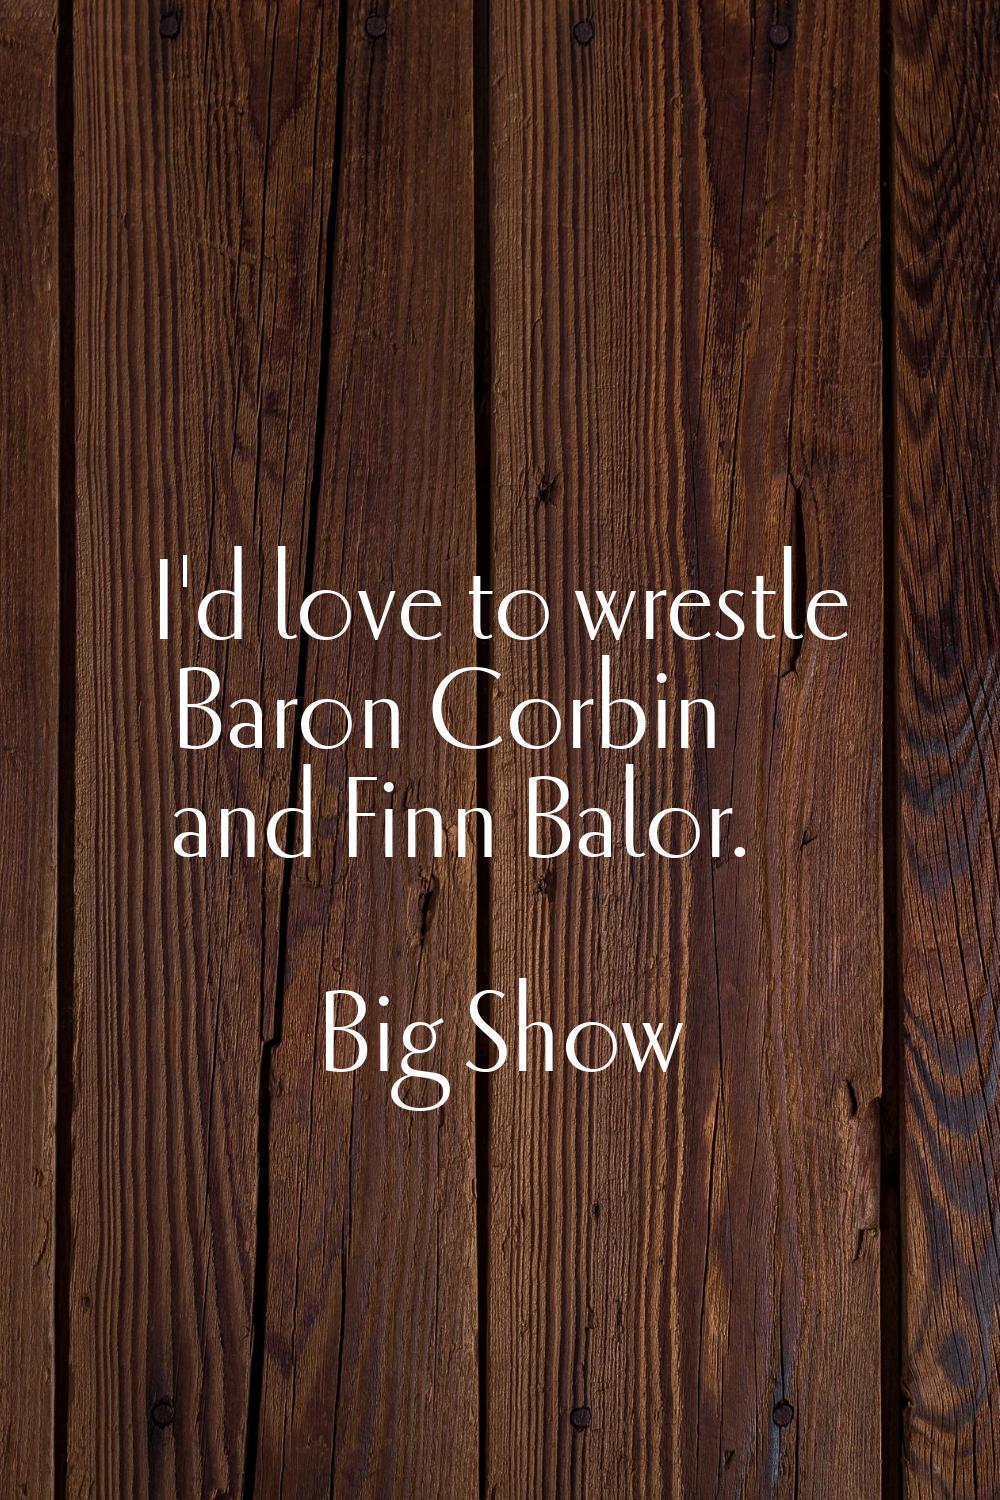 I'd love to wrestle Baron Corbin and Finn Balor.